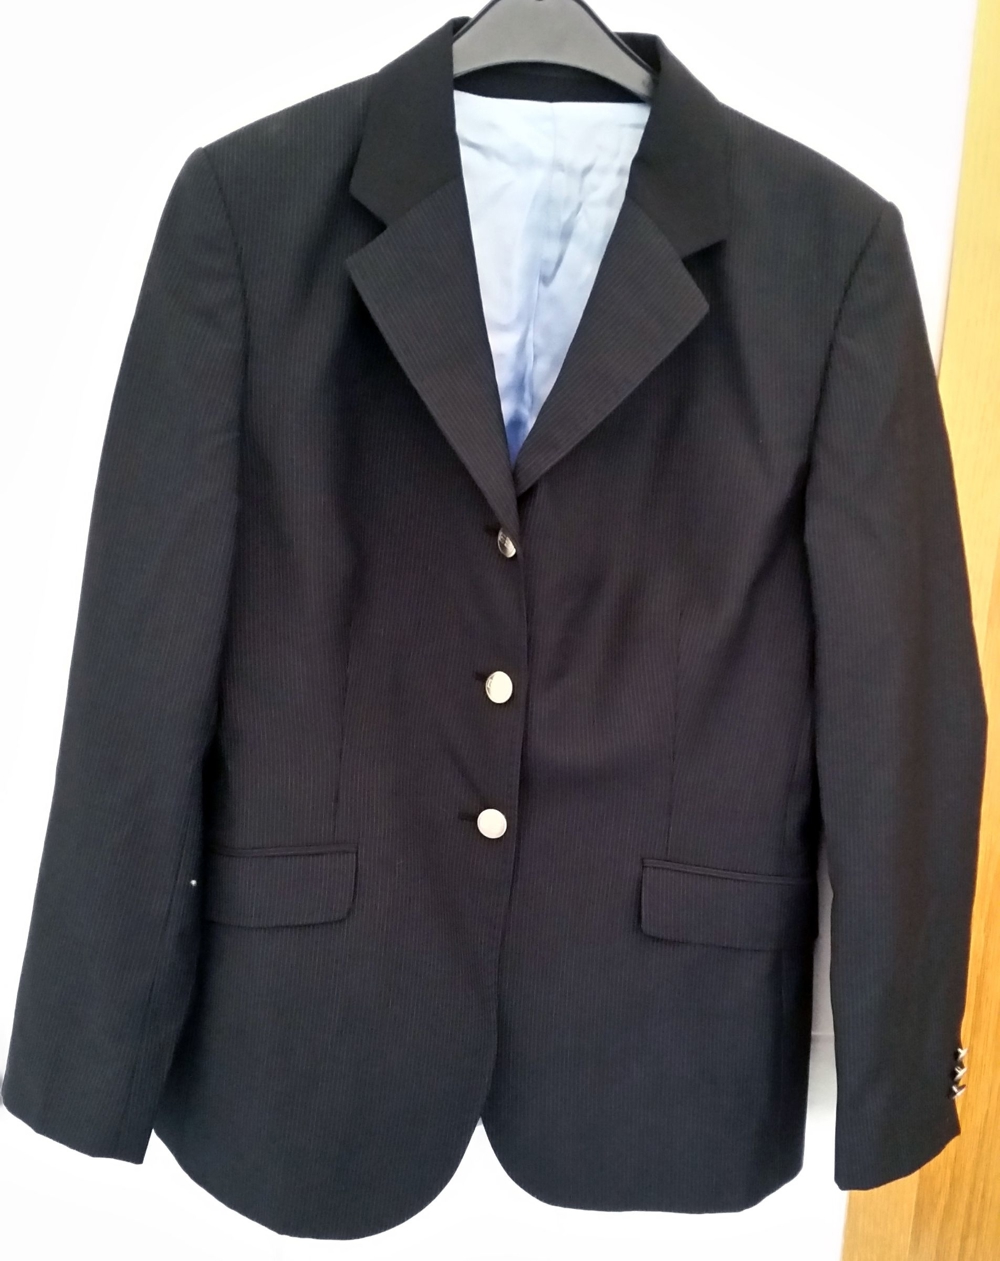 Turnier Reit-Jacket, Gr. 80, Marke GS Modell Stuttgart, schwarz